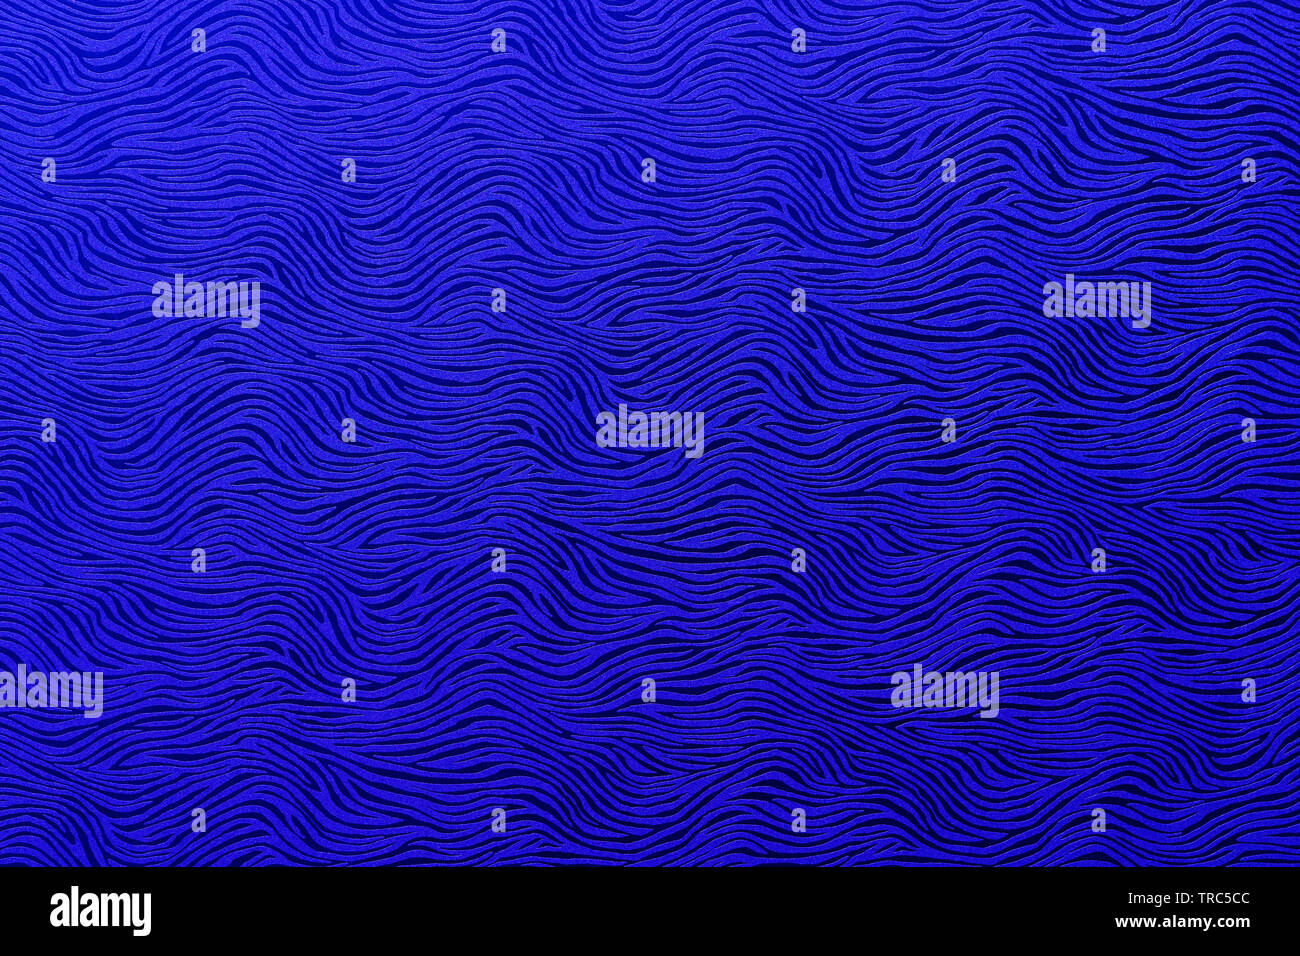 Abstract wavy royal blue pattern Stock Photo